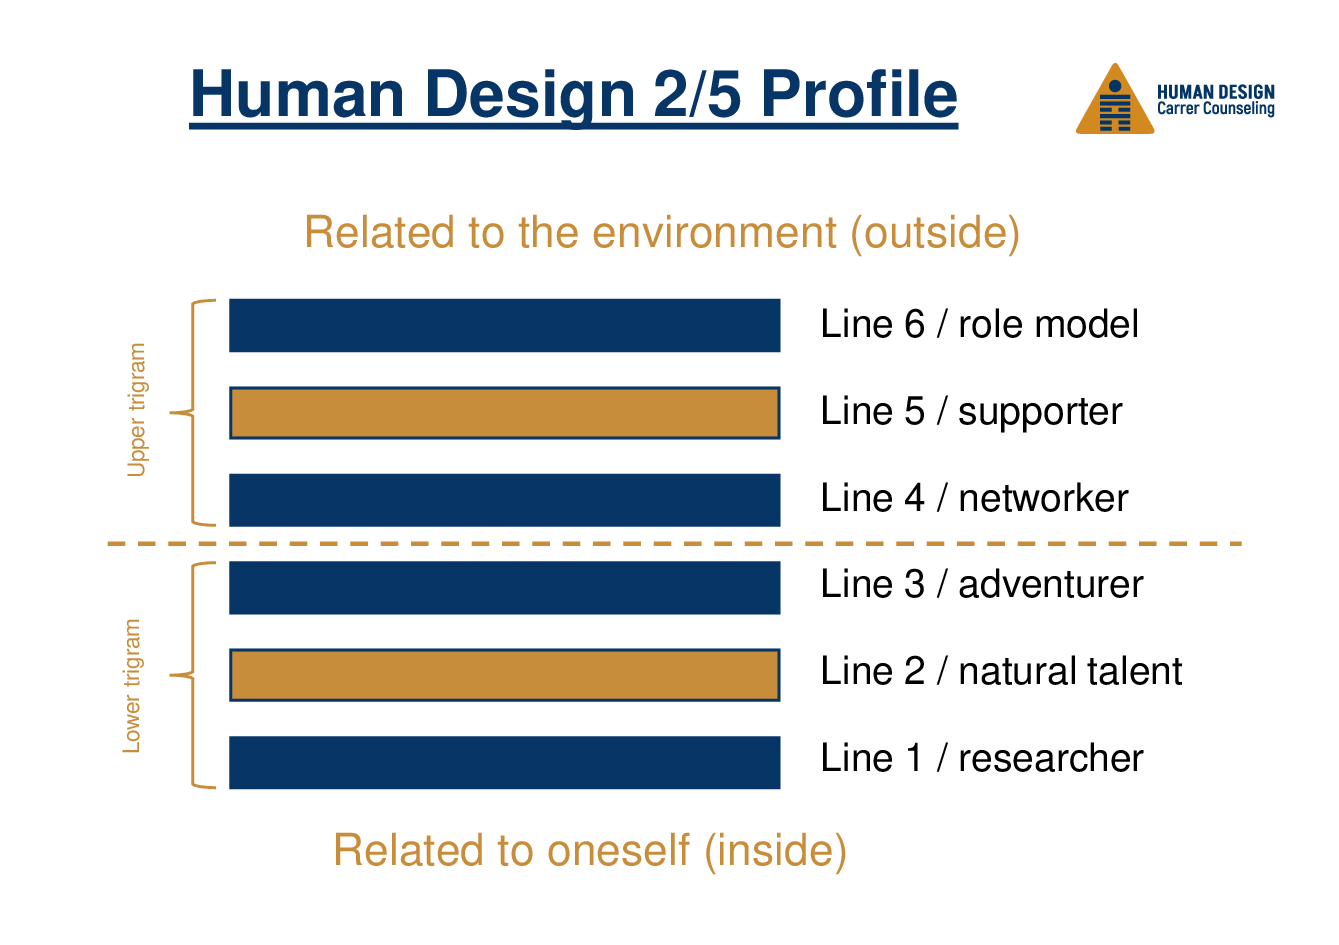 Human Design 2/5 Profile on the Job